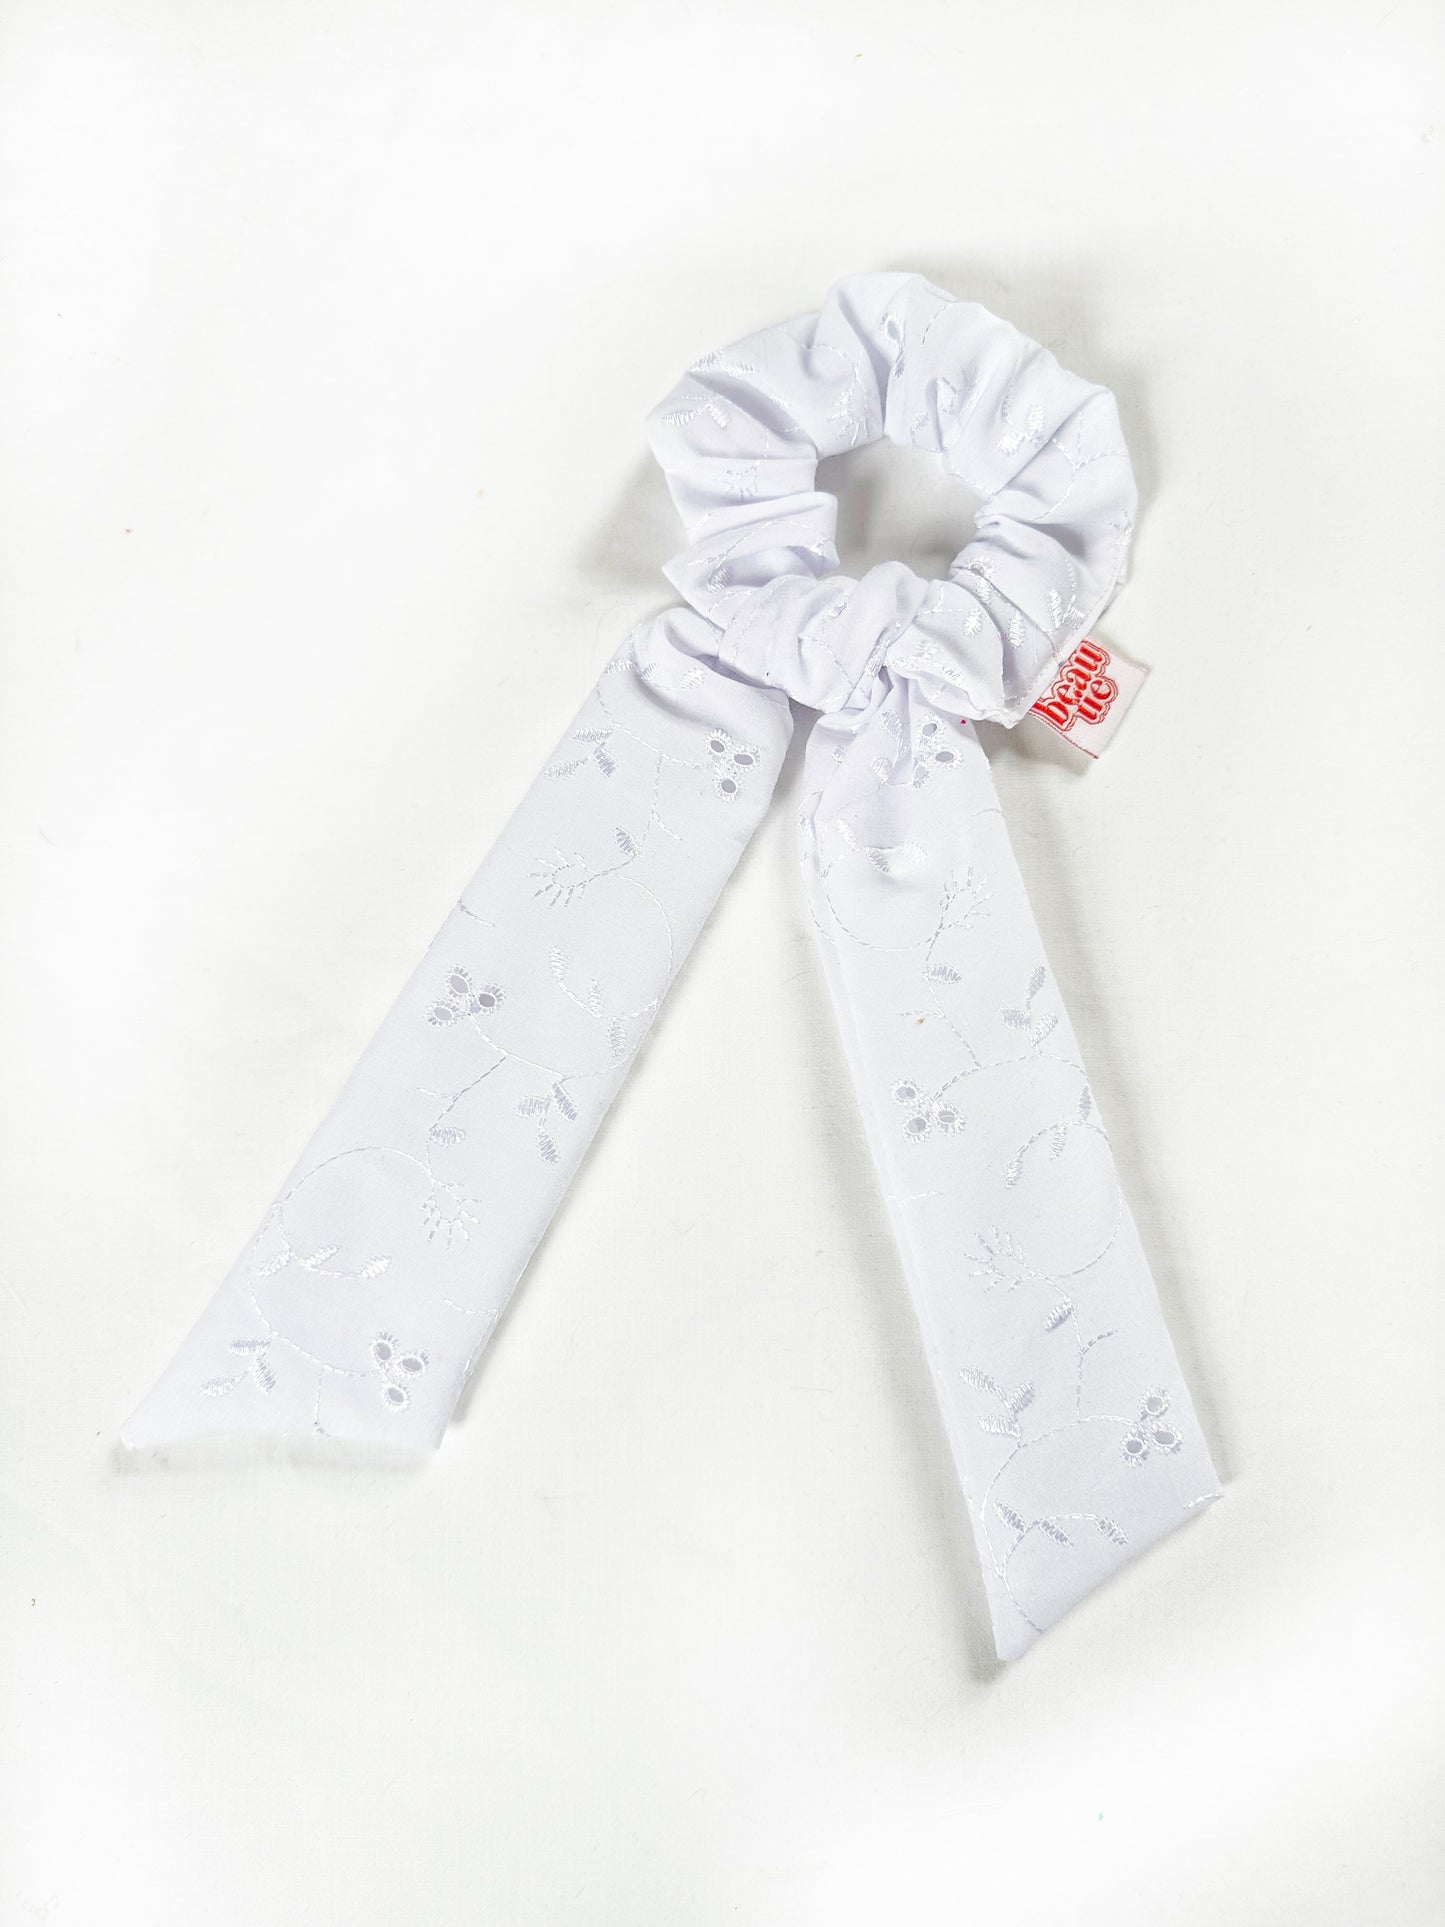 Dolly scarf scrunchie in white broderie, in mini or regular.